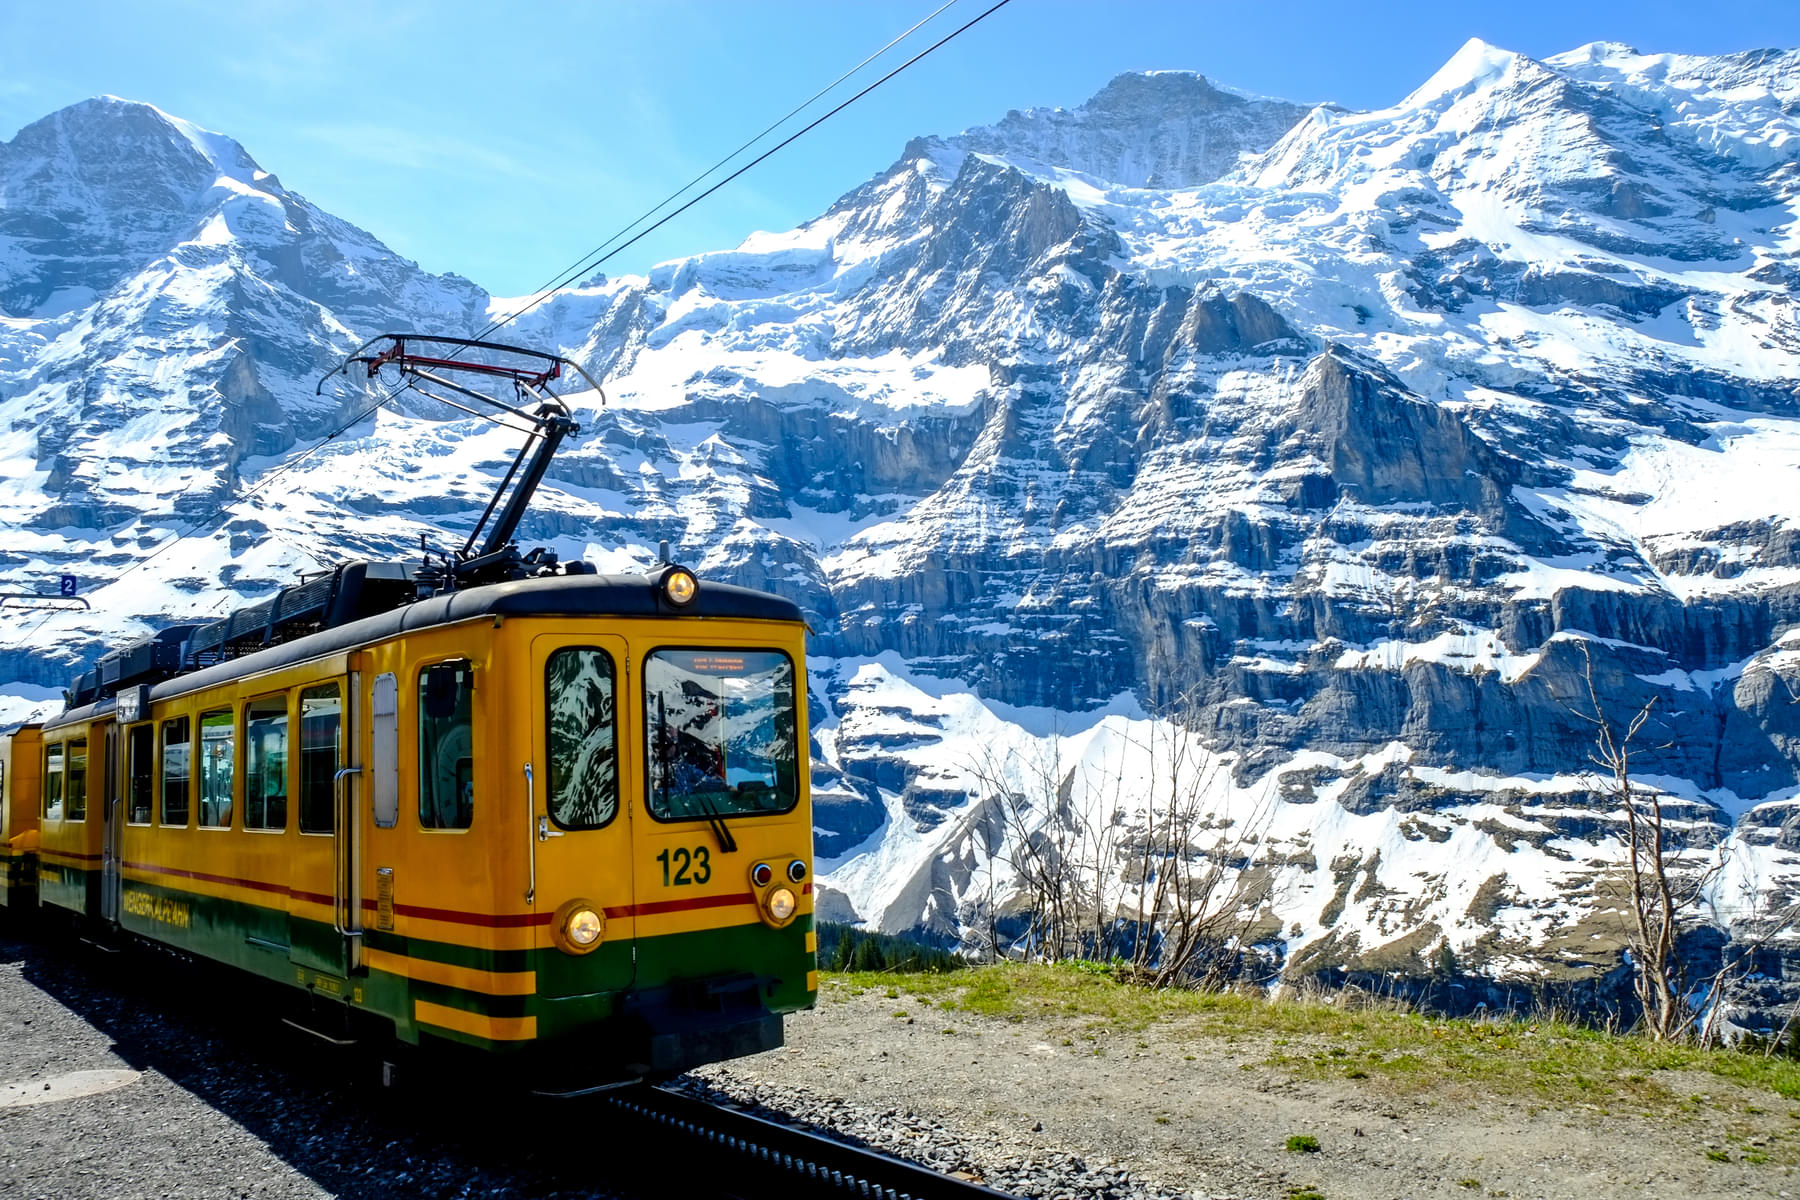 Take a scenic train ride up to Jungfraujoch